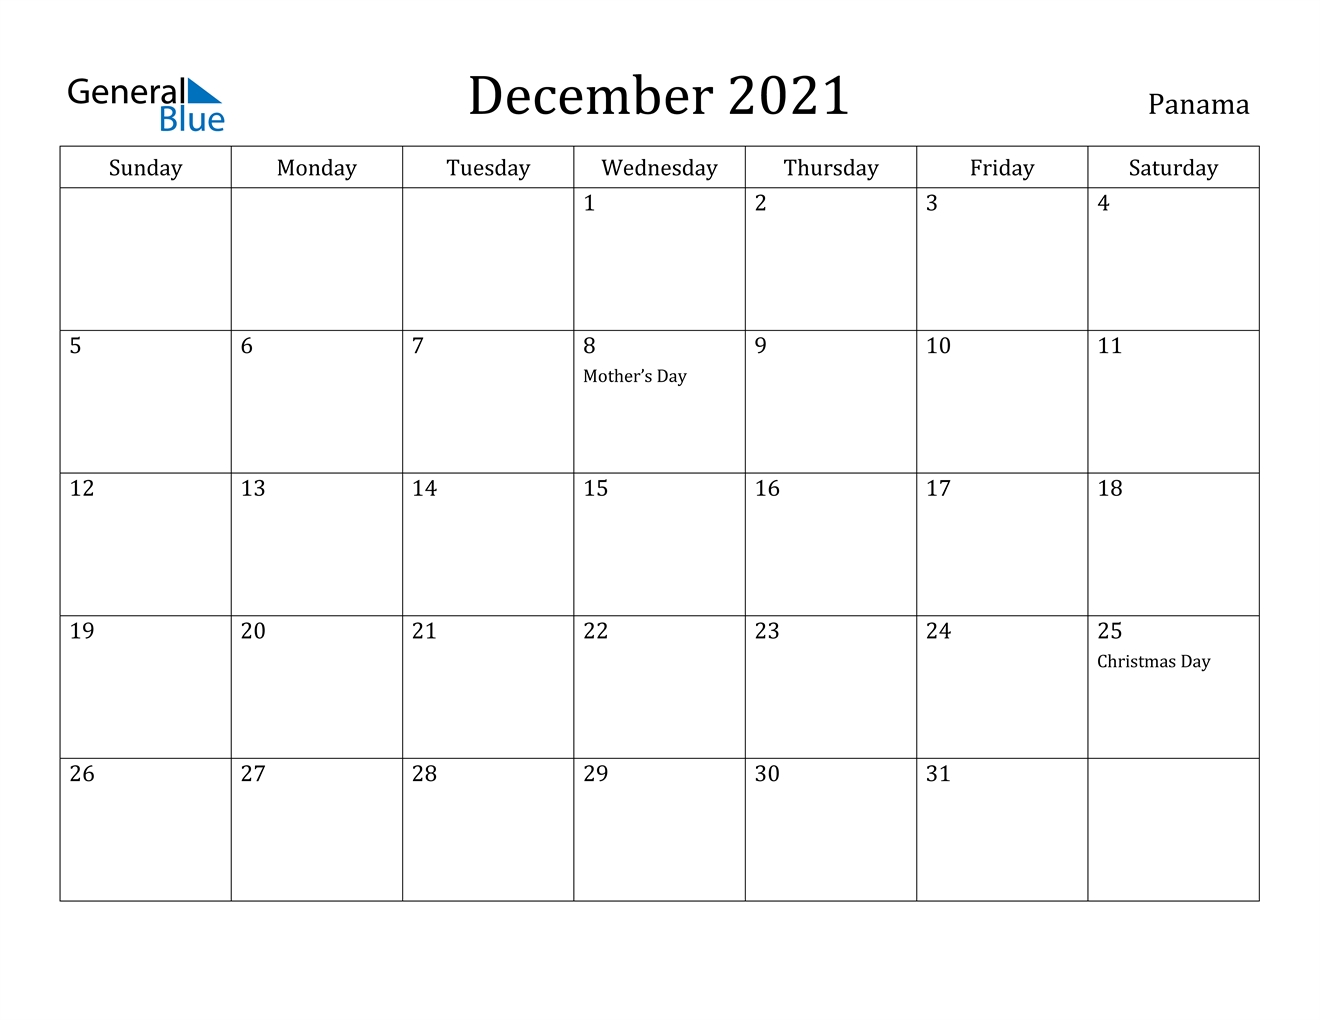 December 2021 Calendar - Panama December 2021 Calendar Holidays